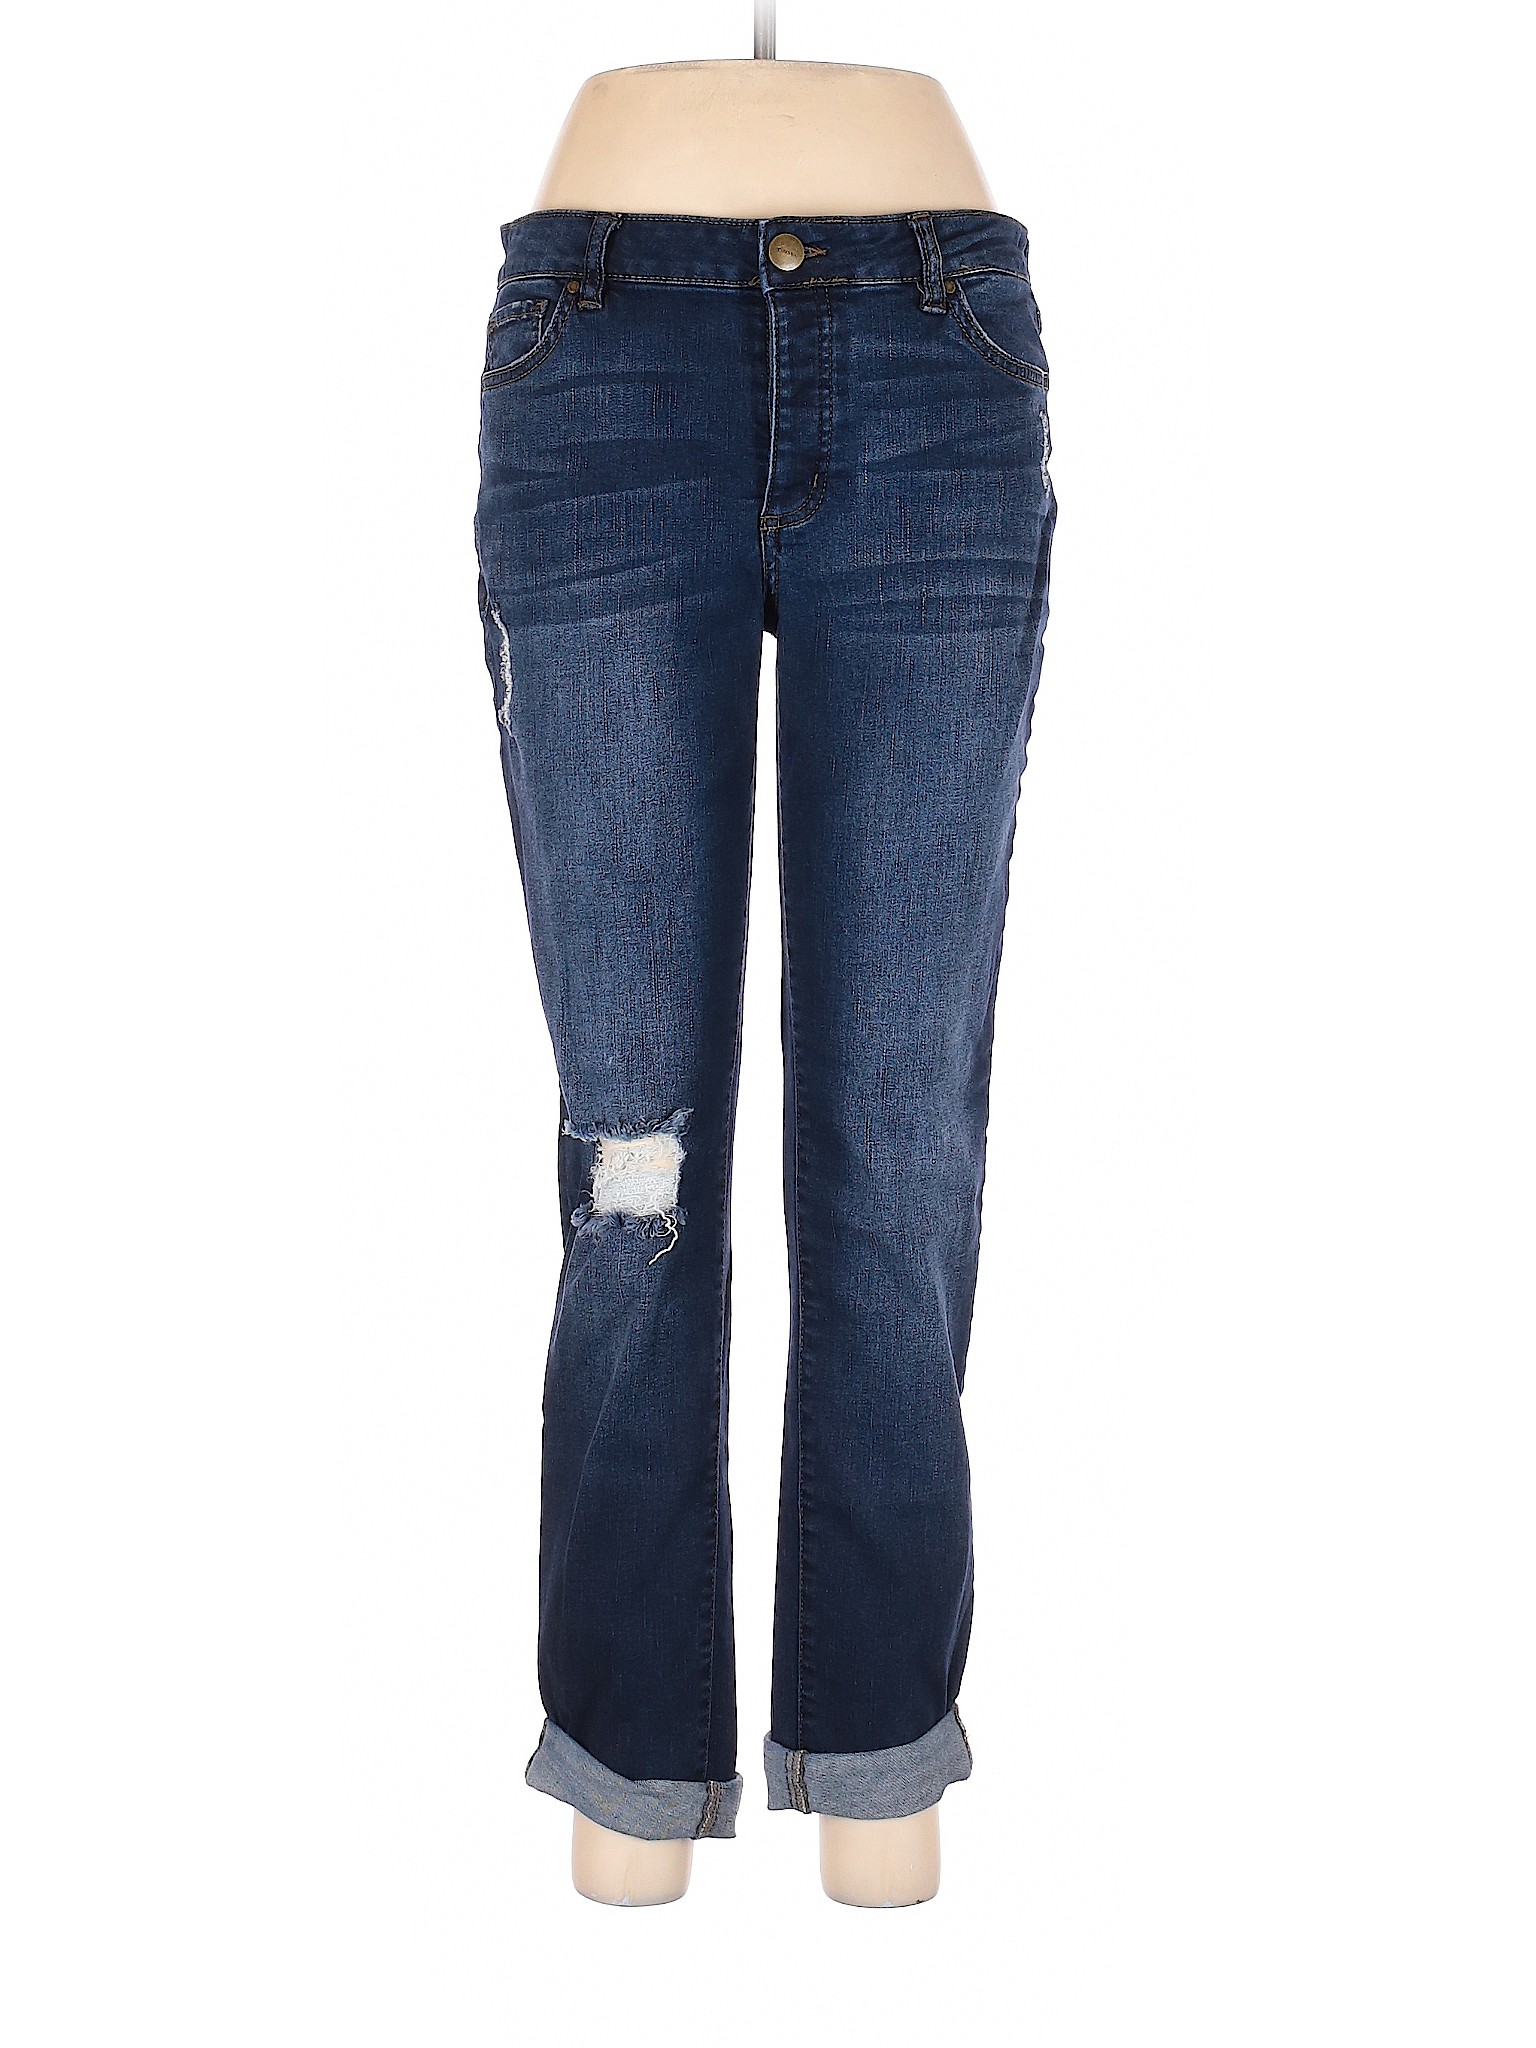 Tinsel Denim Couture Women Blue Jeans 29W | eBay